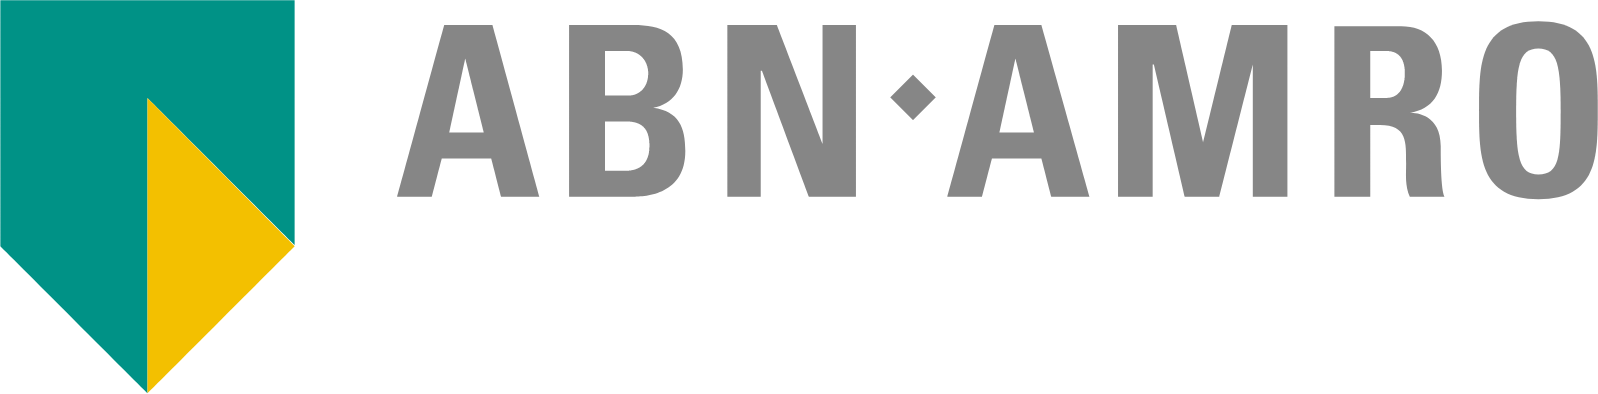 ABN AMRO
 logo large (transparent PNG)